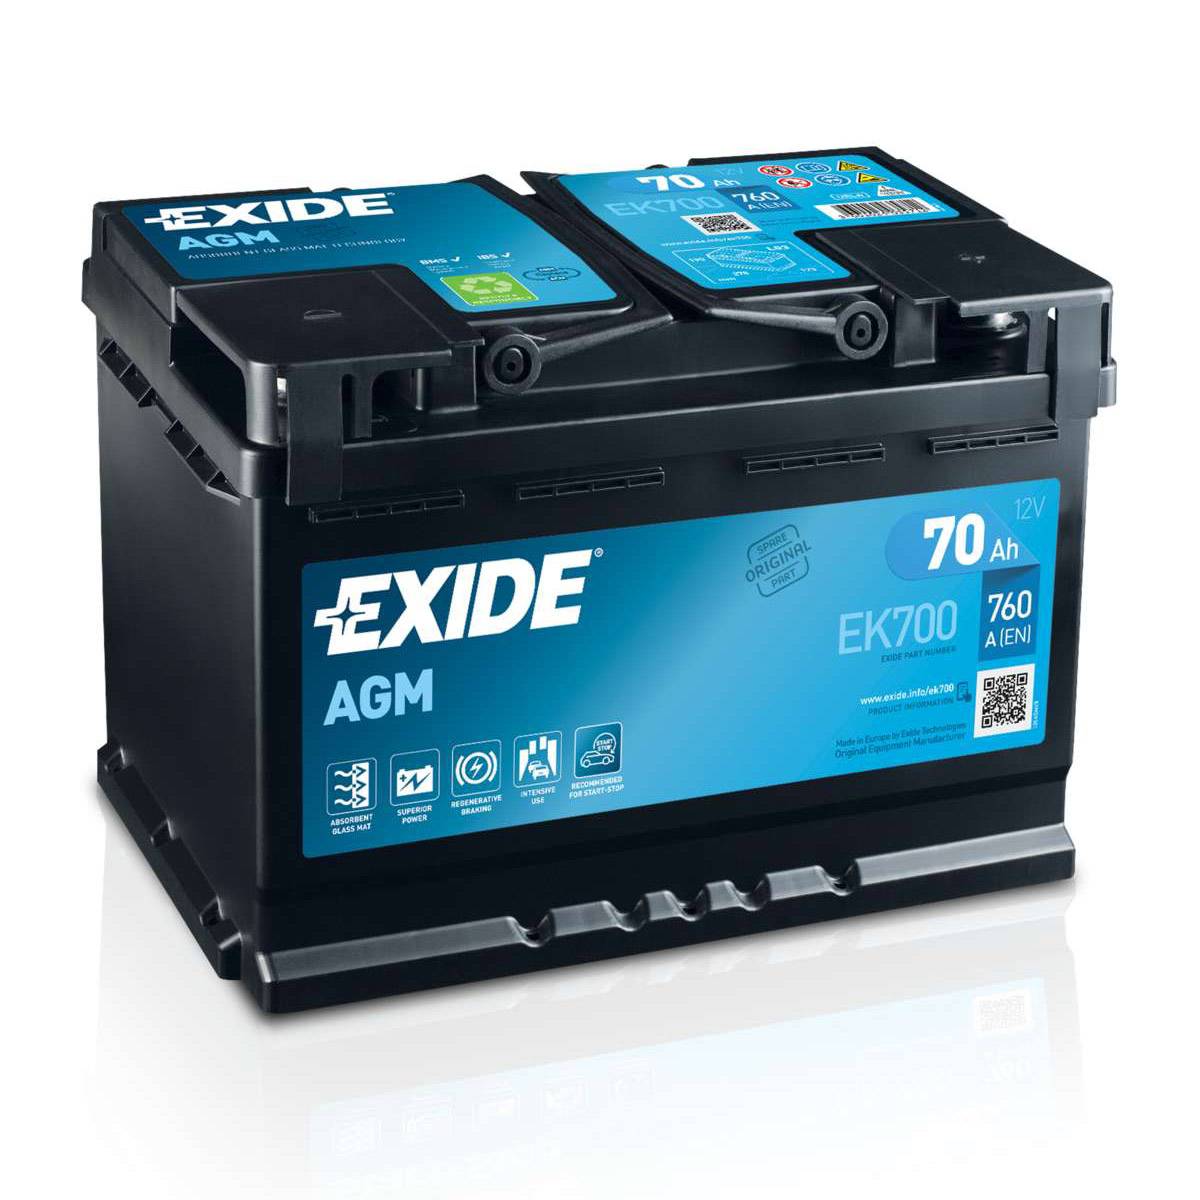 Exide EK700 Start-Stop AGM 12V 70 Ah 760A car battery, Starter batteries, Boots & Marine, Batteries by application